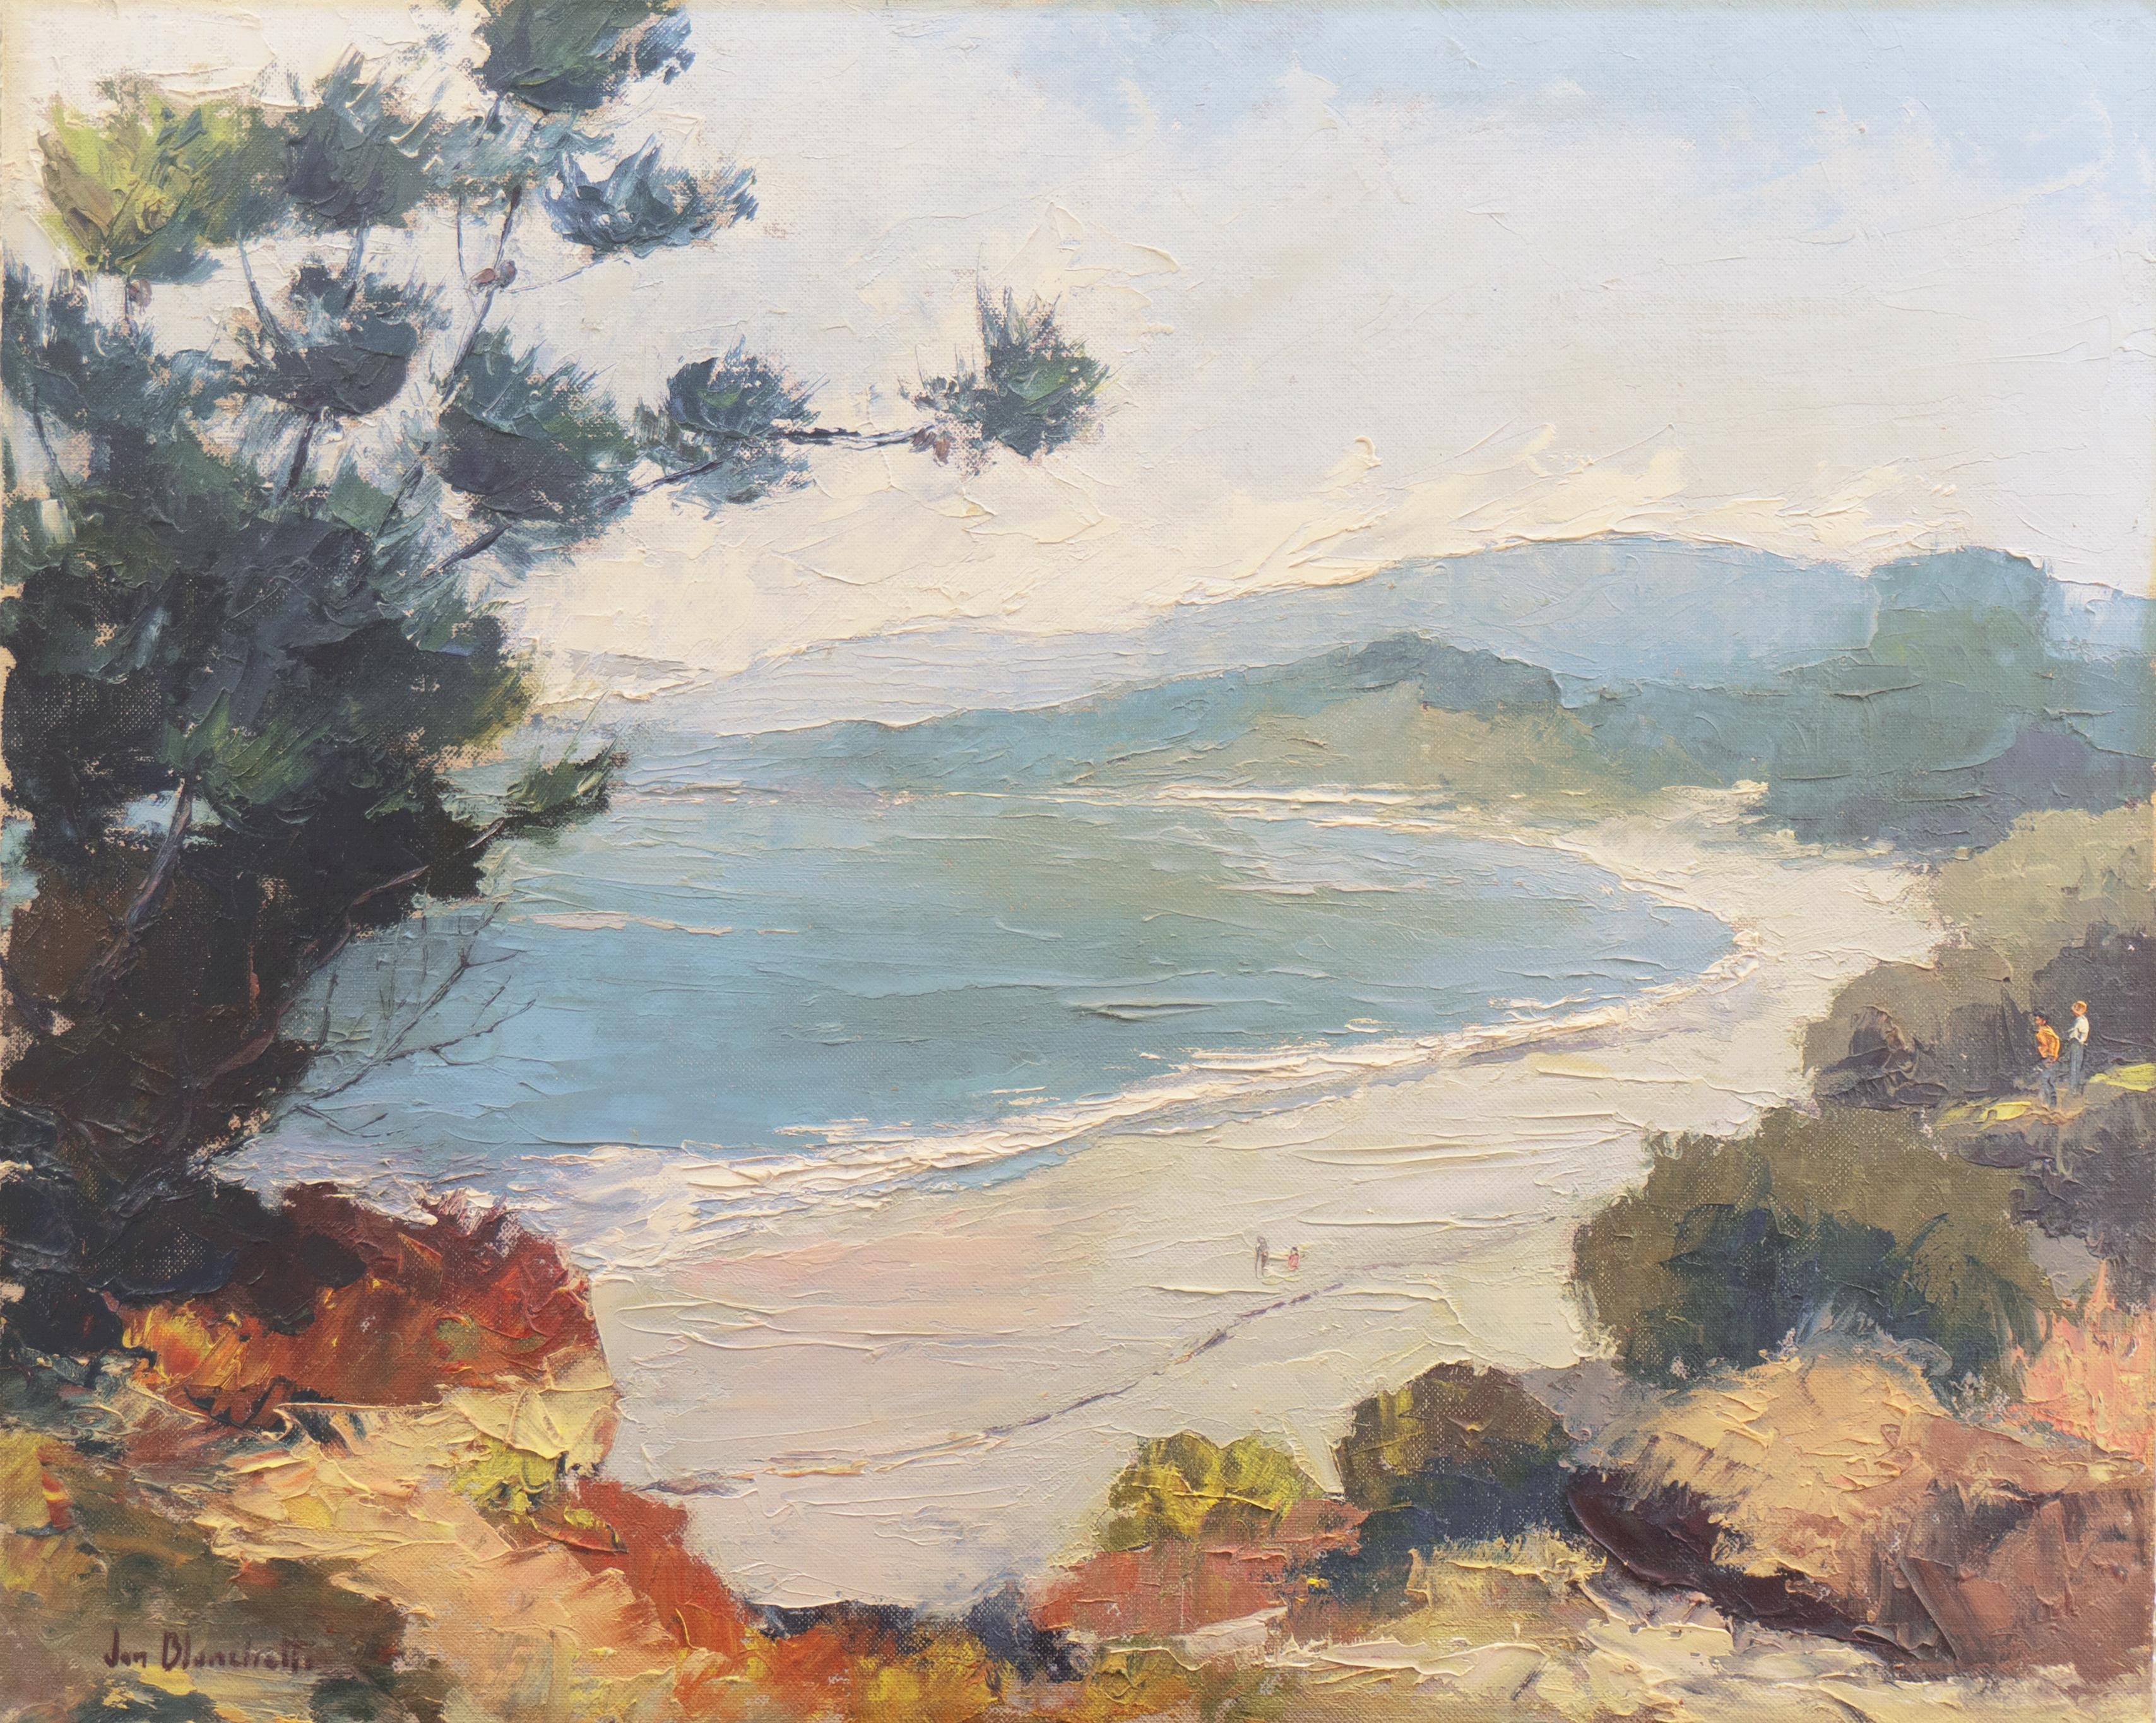 Jon Blanchette Landscape Painting - 'Rio Del Mar Beach, Aptos', Santa Cruz, California, Pittsburgh Art Institute